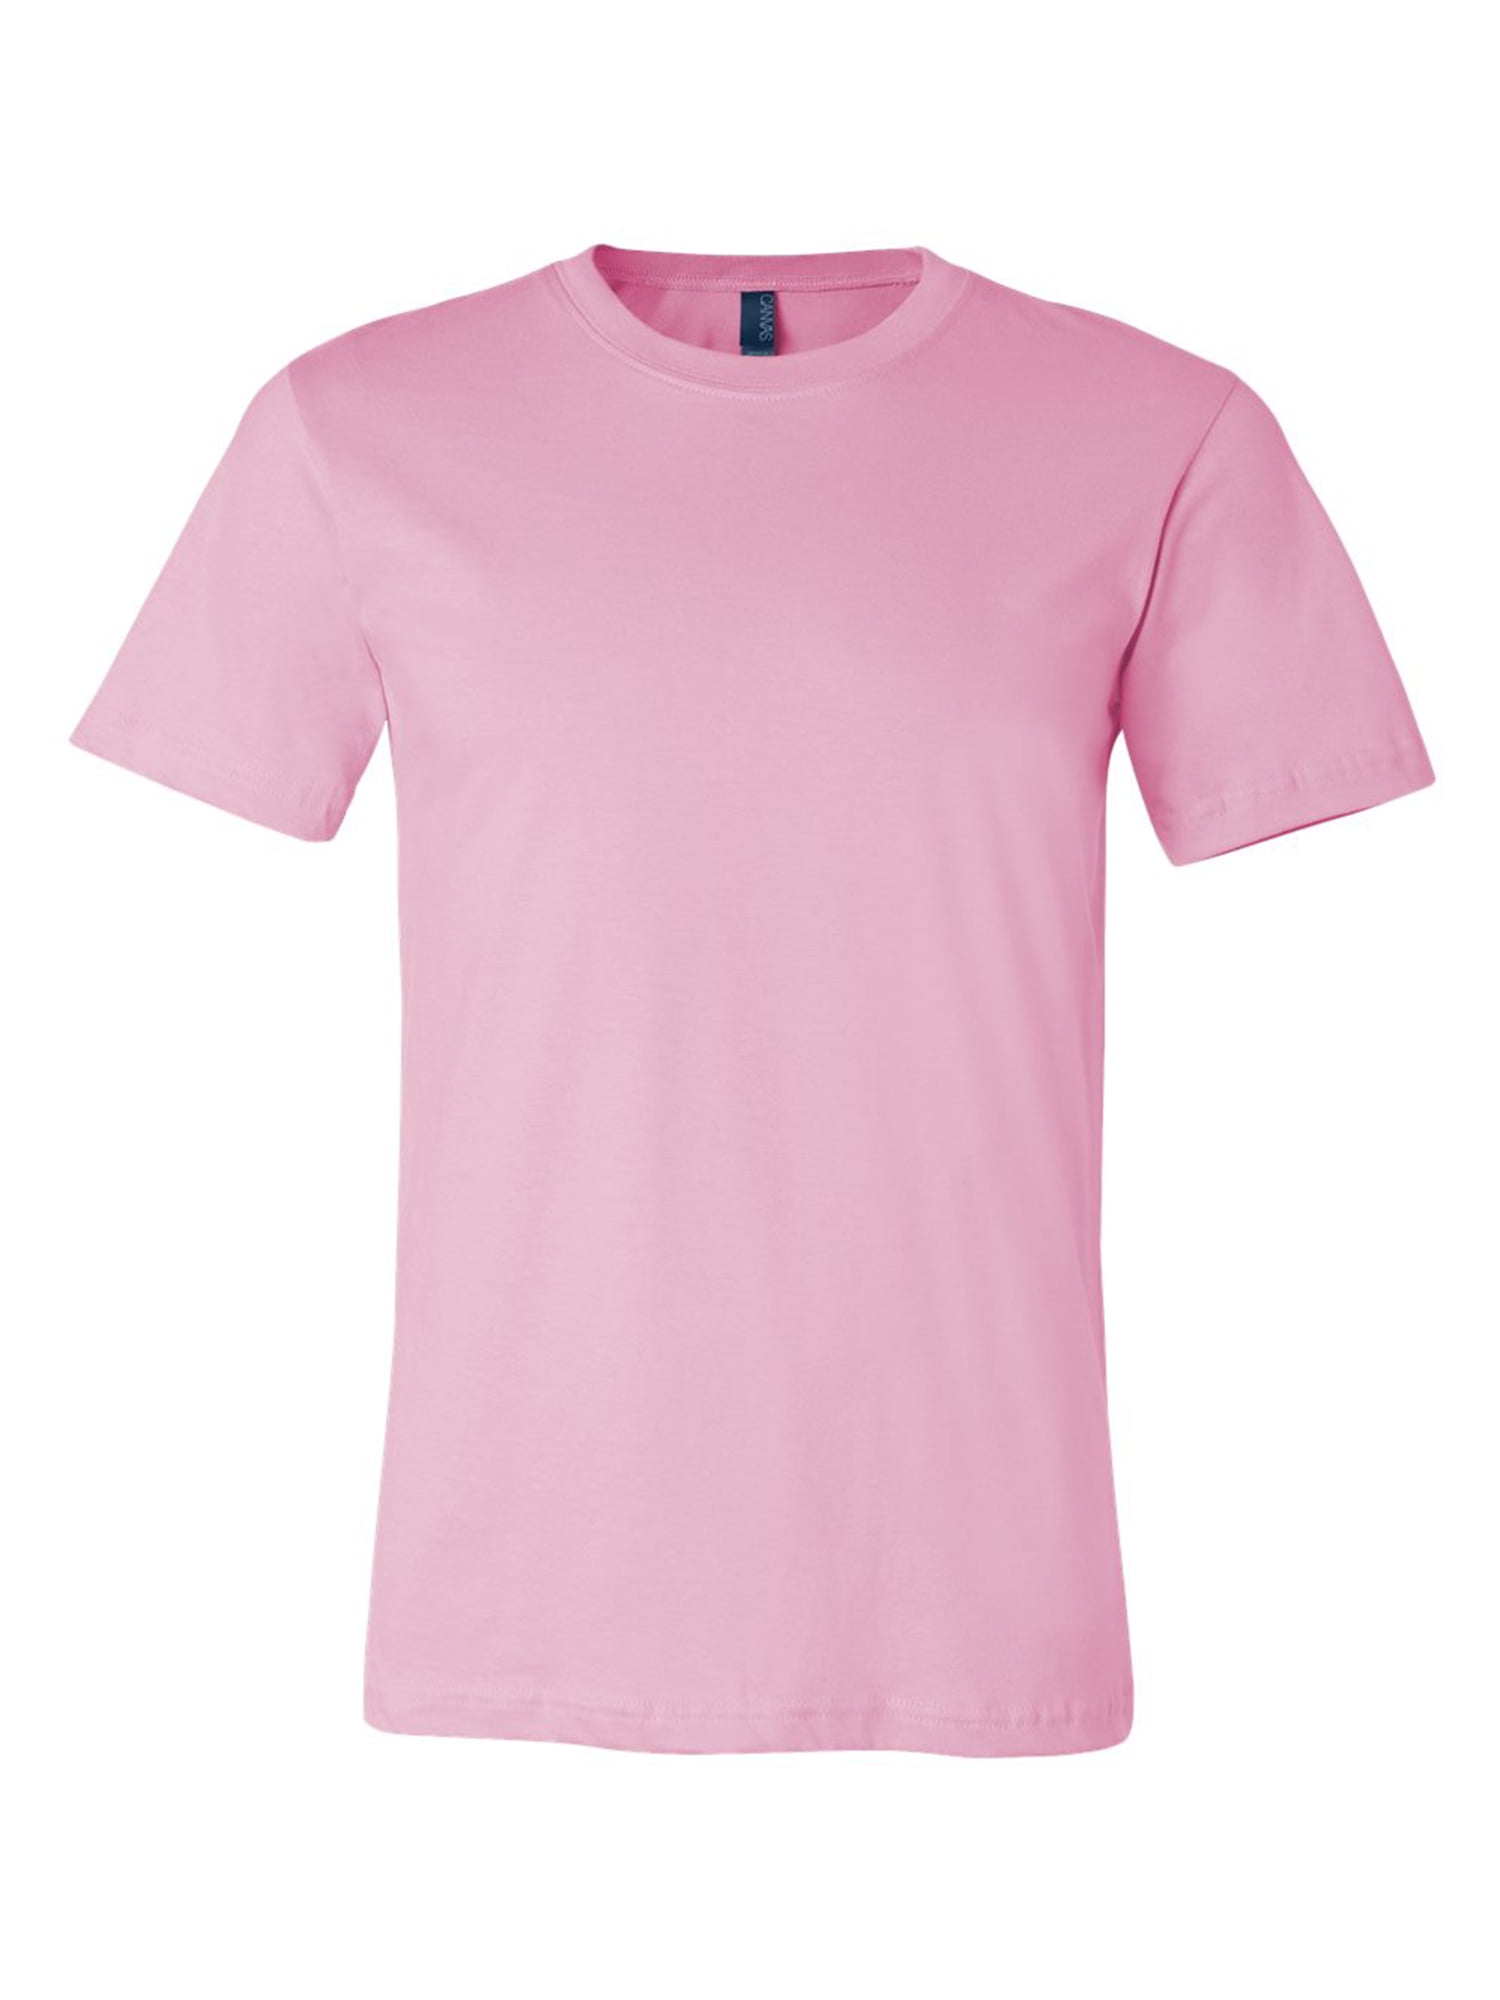 5 Pack) GILDAN Short Sleeve Mix Colors Plain T Shirts S M L XL 2XL